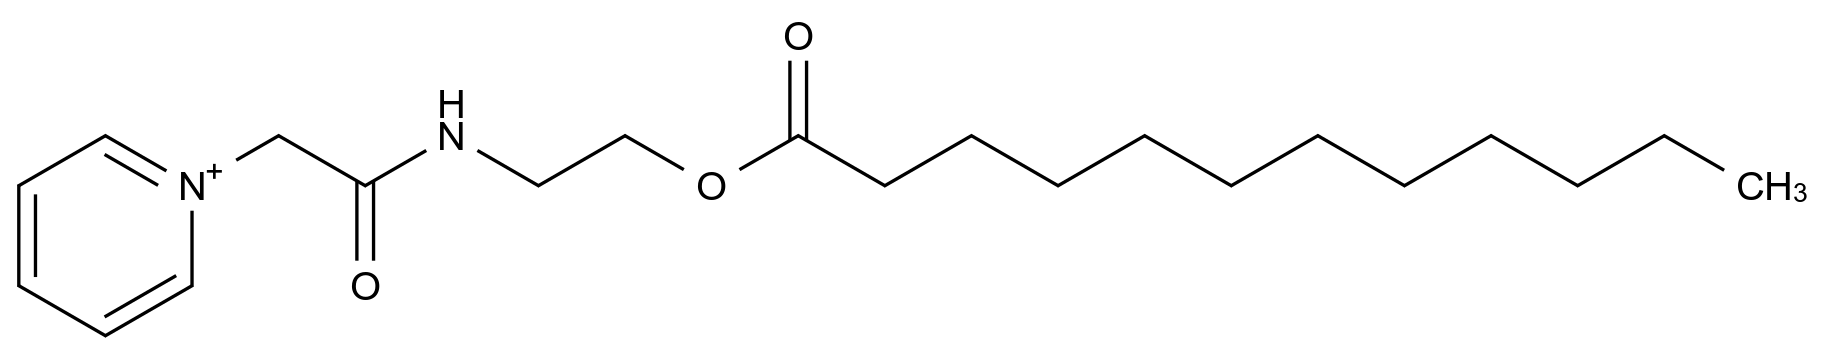 2-[(2-pyridin-1-ium-1-ylacetyl)amino]ethyl dodecanoate_109260-82-4